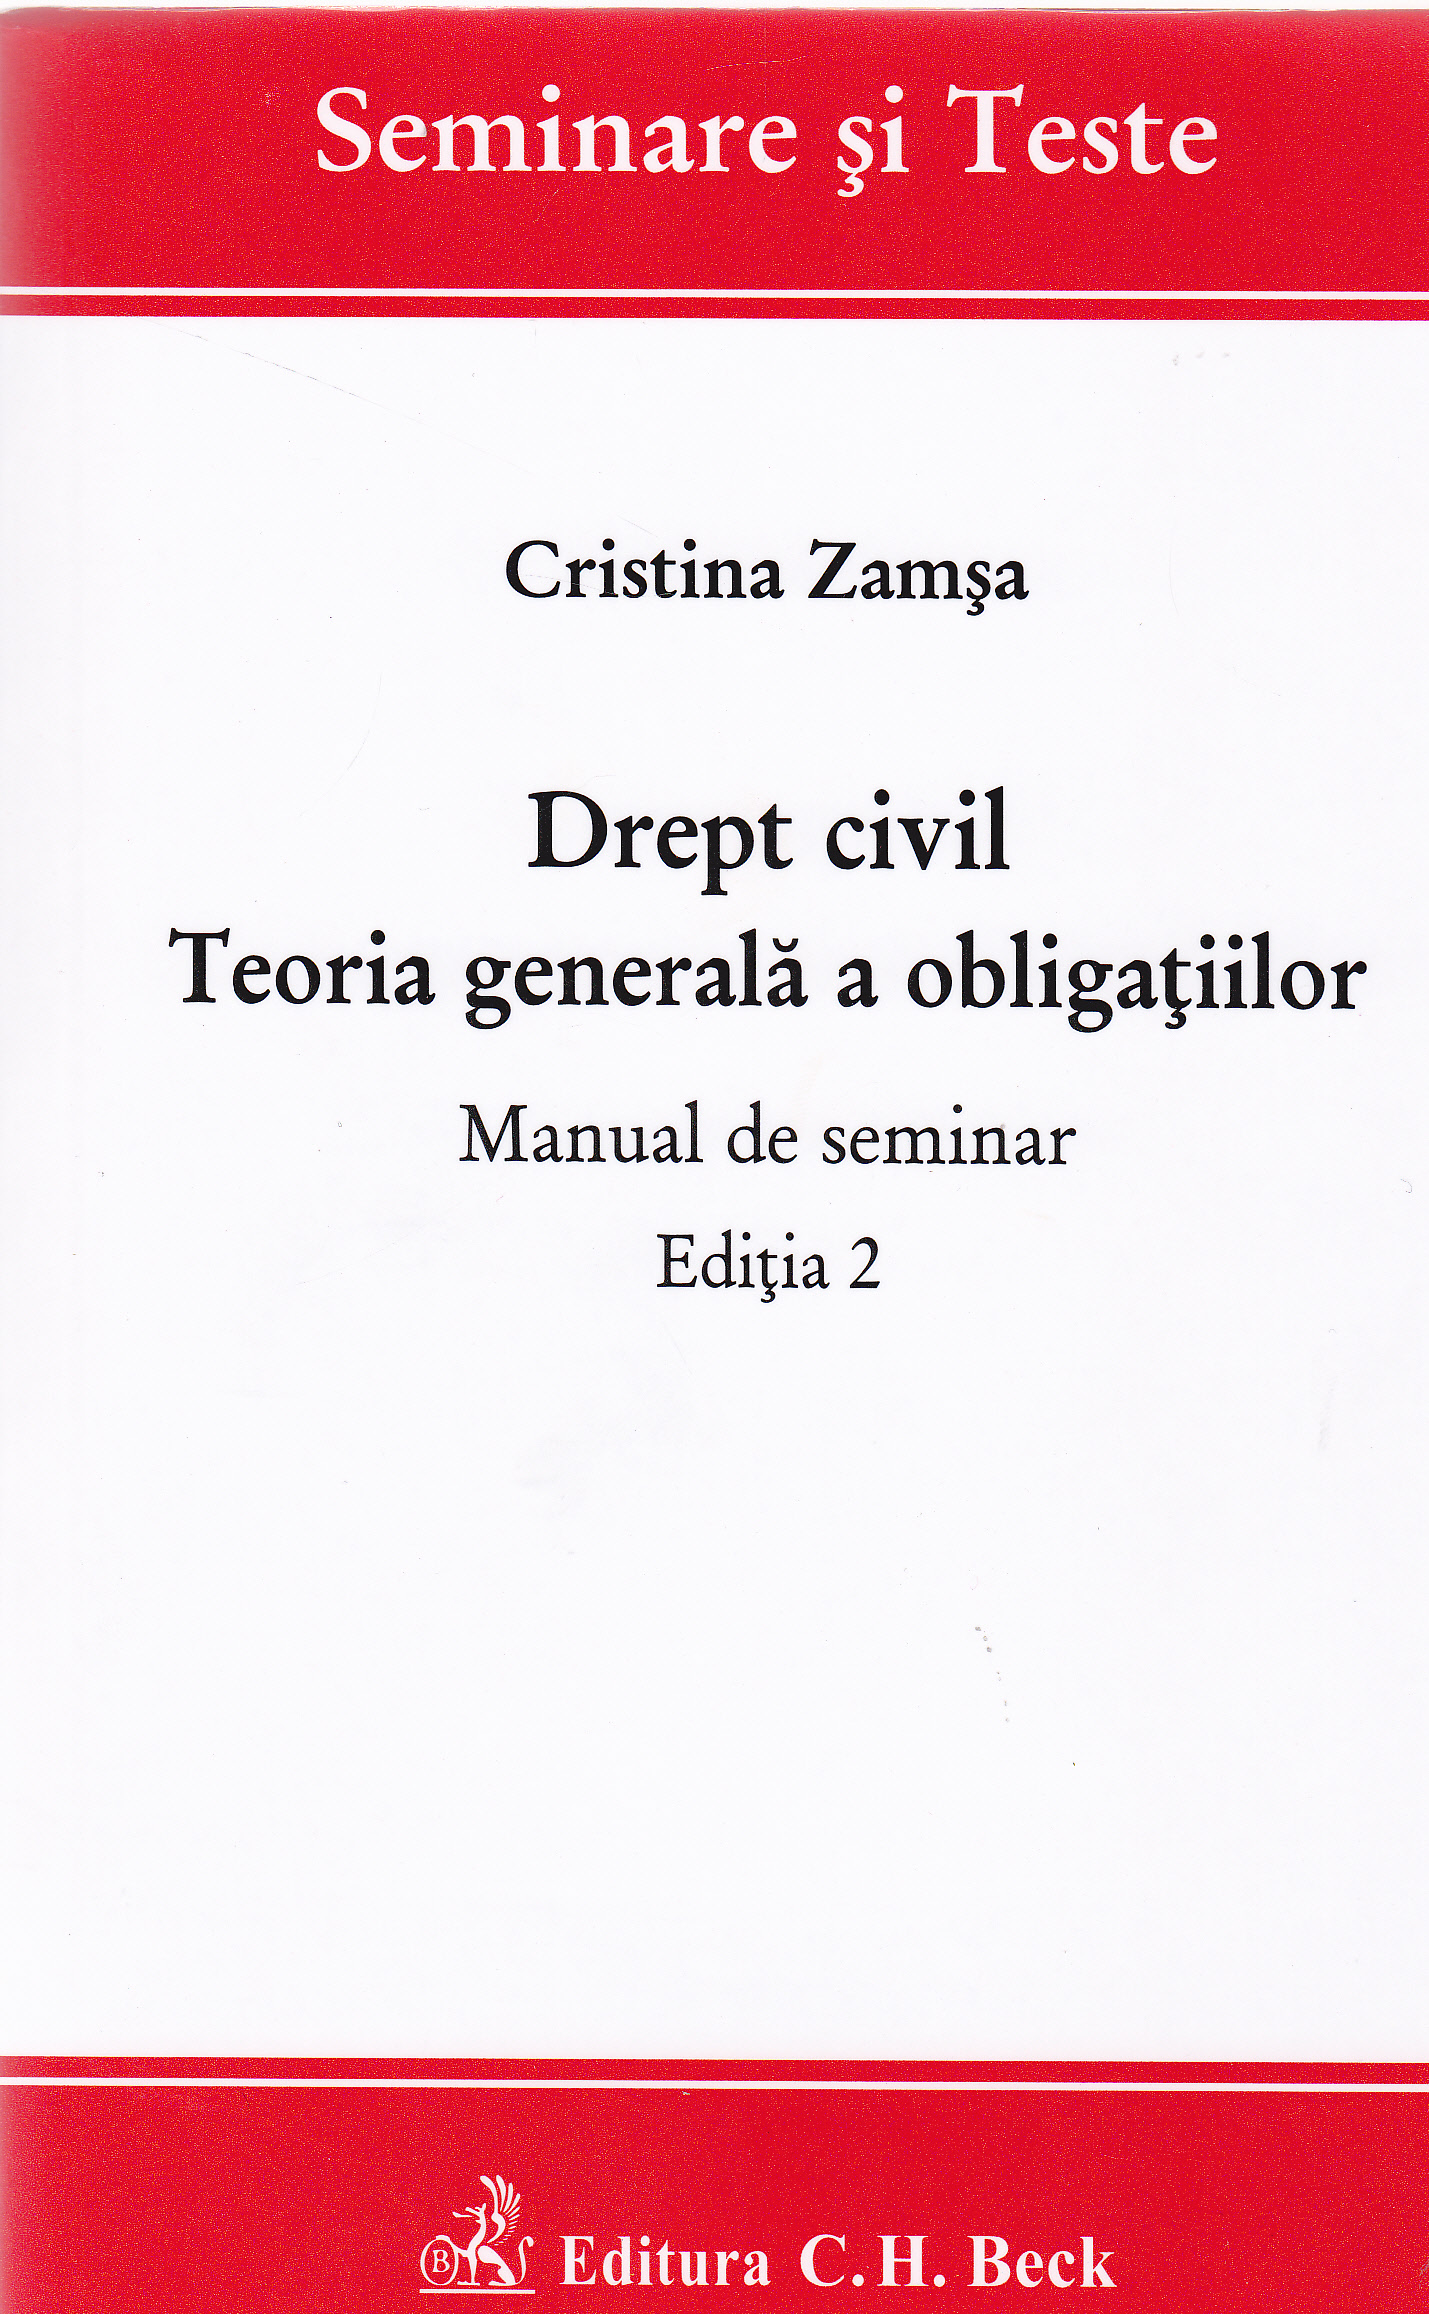 Drept Civil. Teoria generala a obligatiilor. Manual de seminar ed.2 - Cristina Zamsa